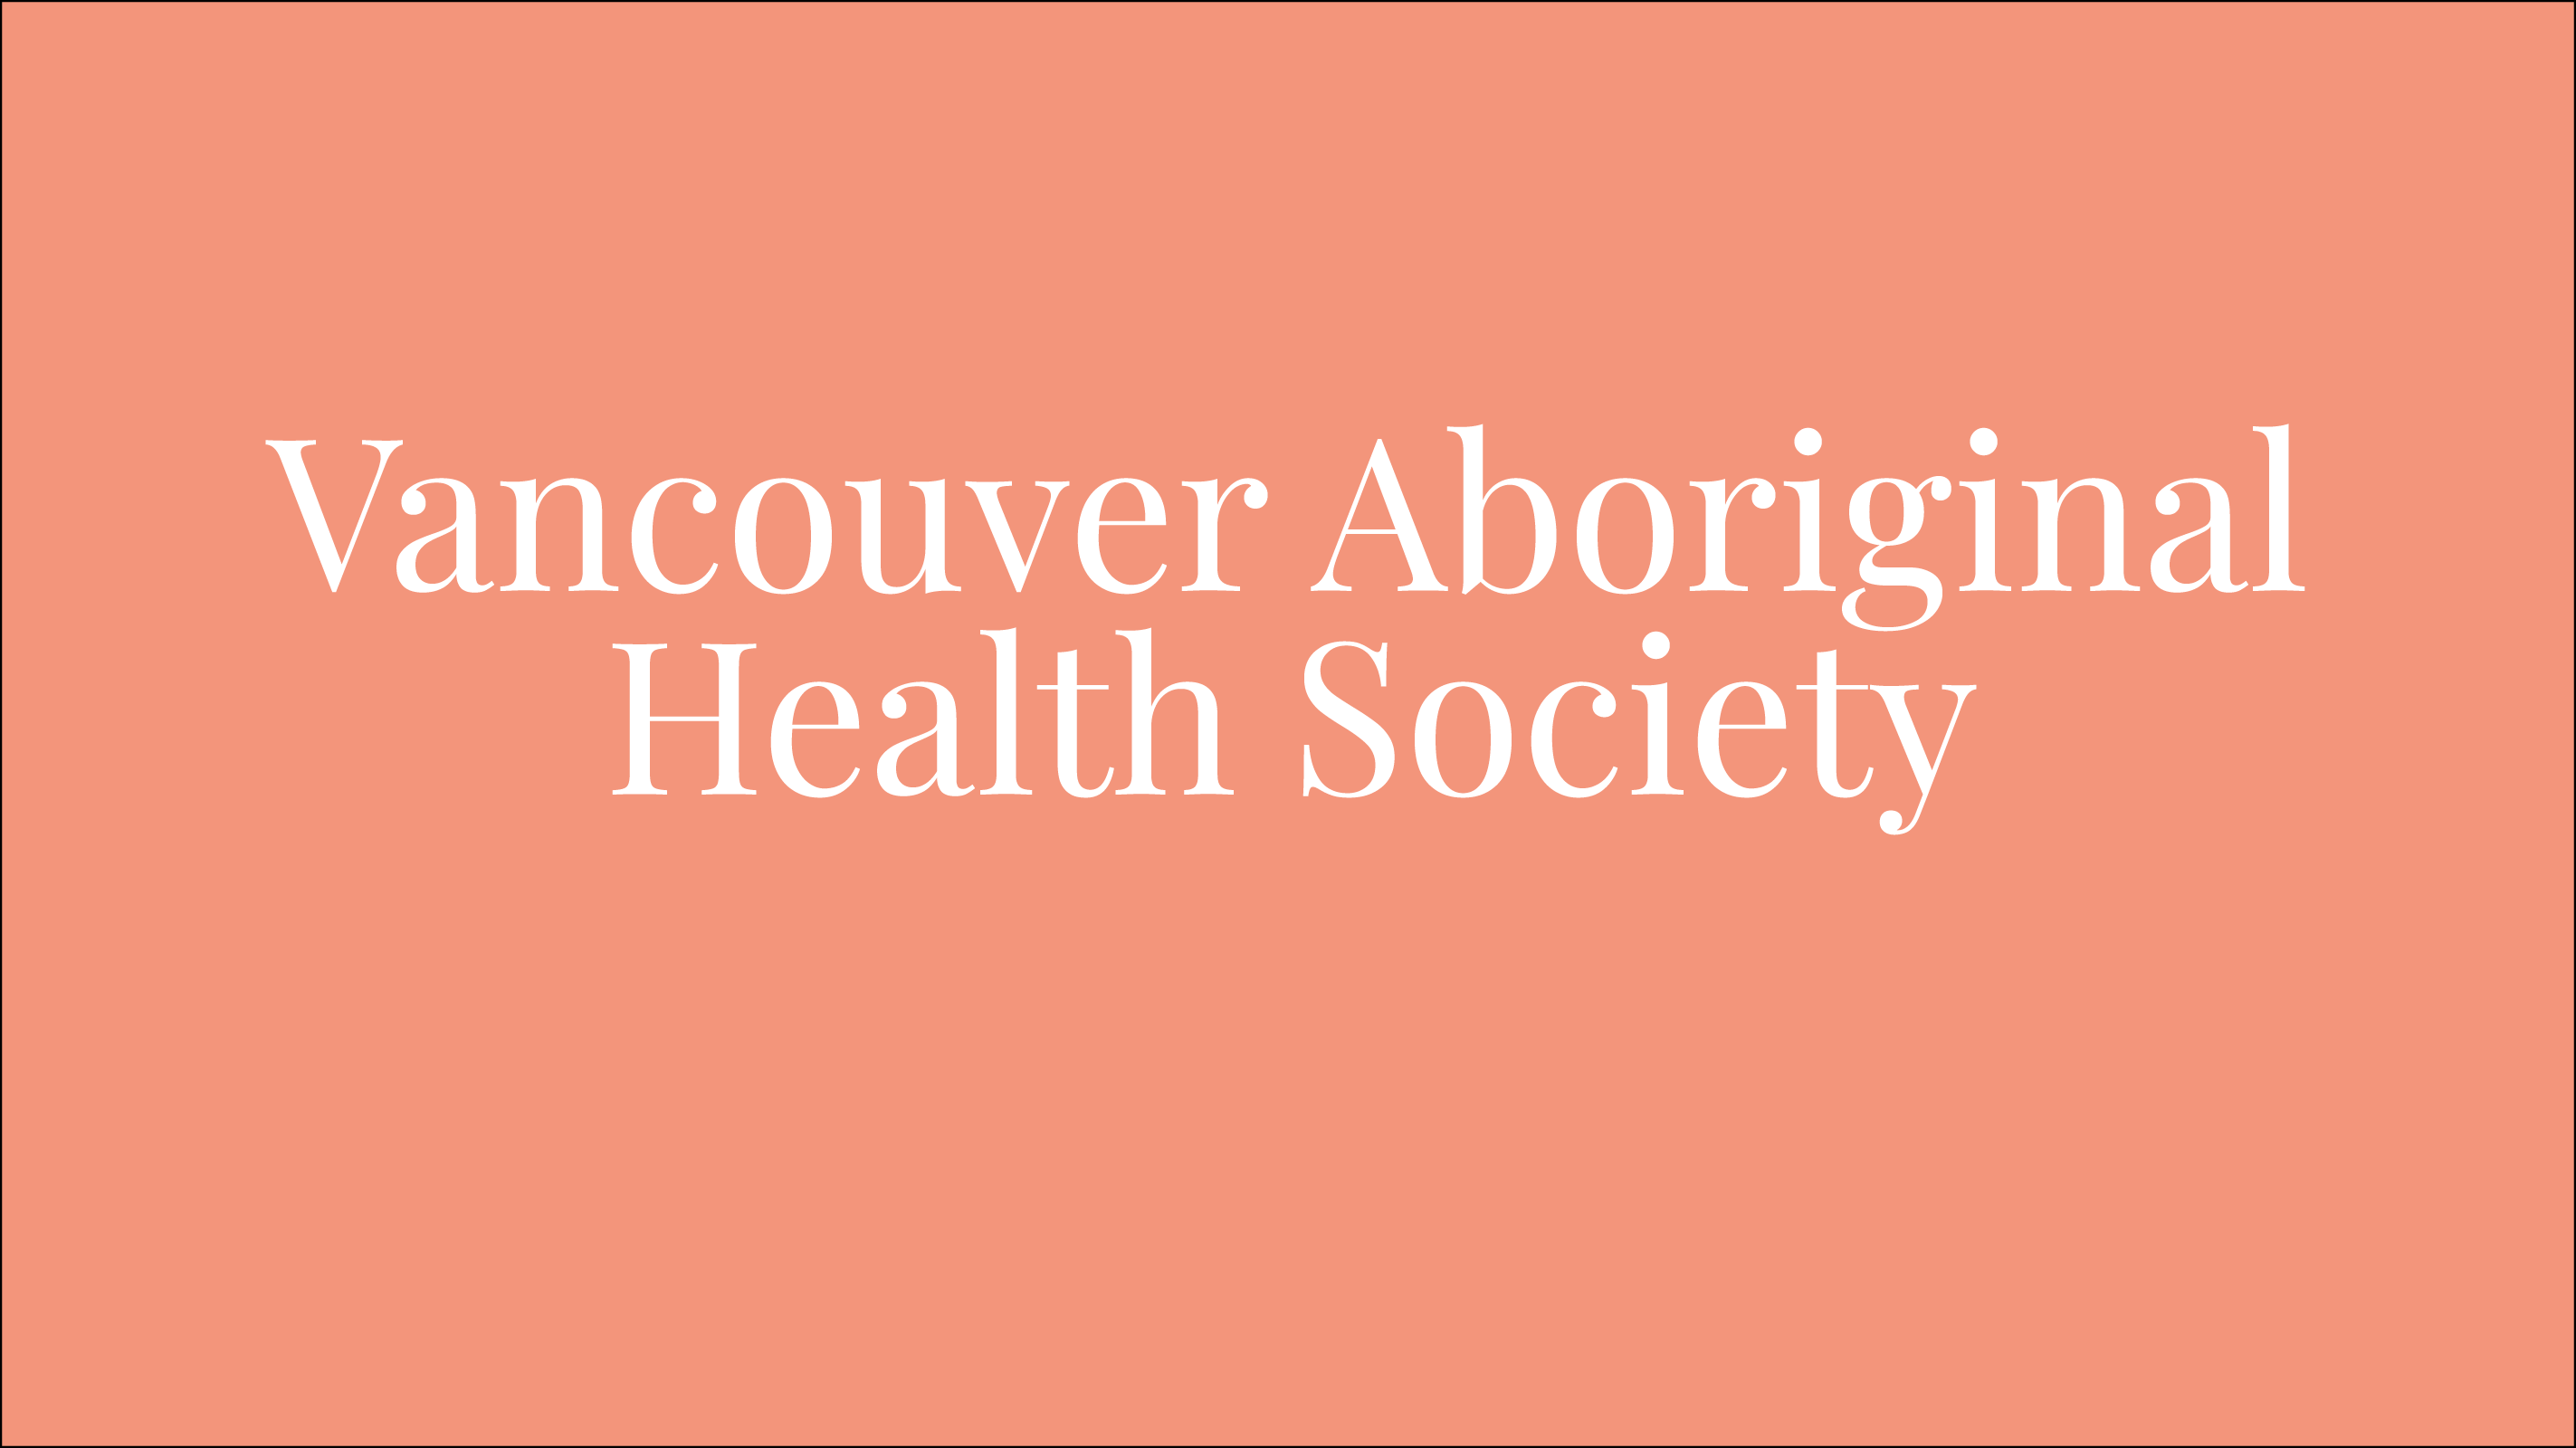 Our February Non-Profit - Vancouver Aboriginal Health Society